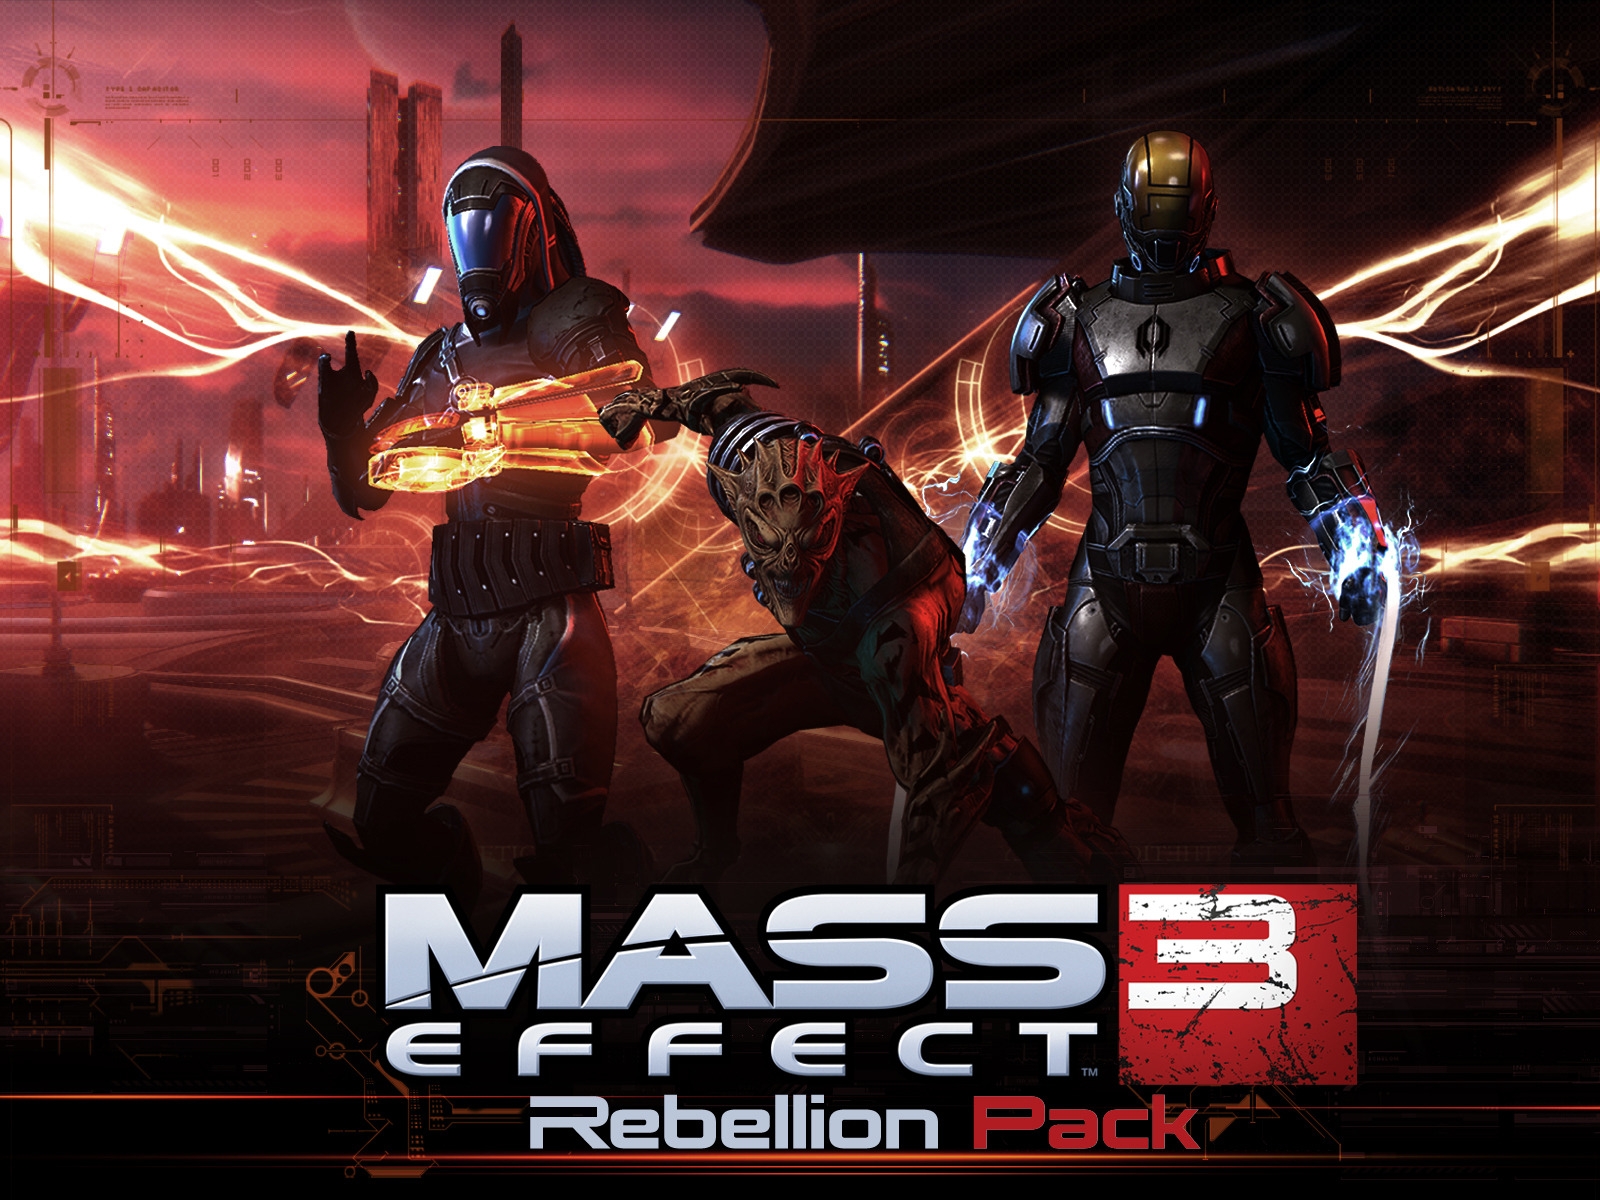 Mass Effect 3 Rebellion Pack for 1600 x 1200 resolution